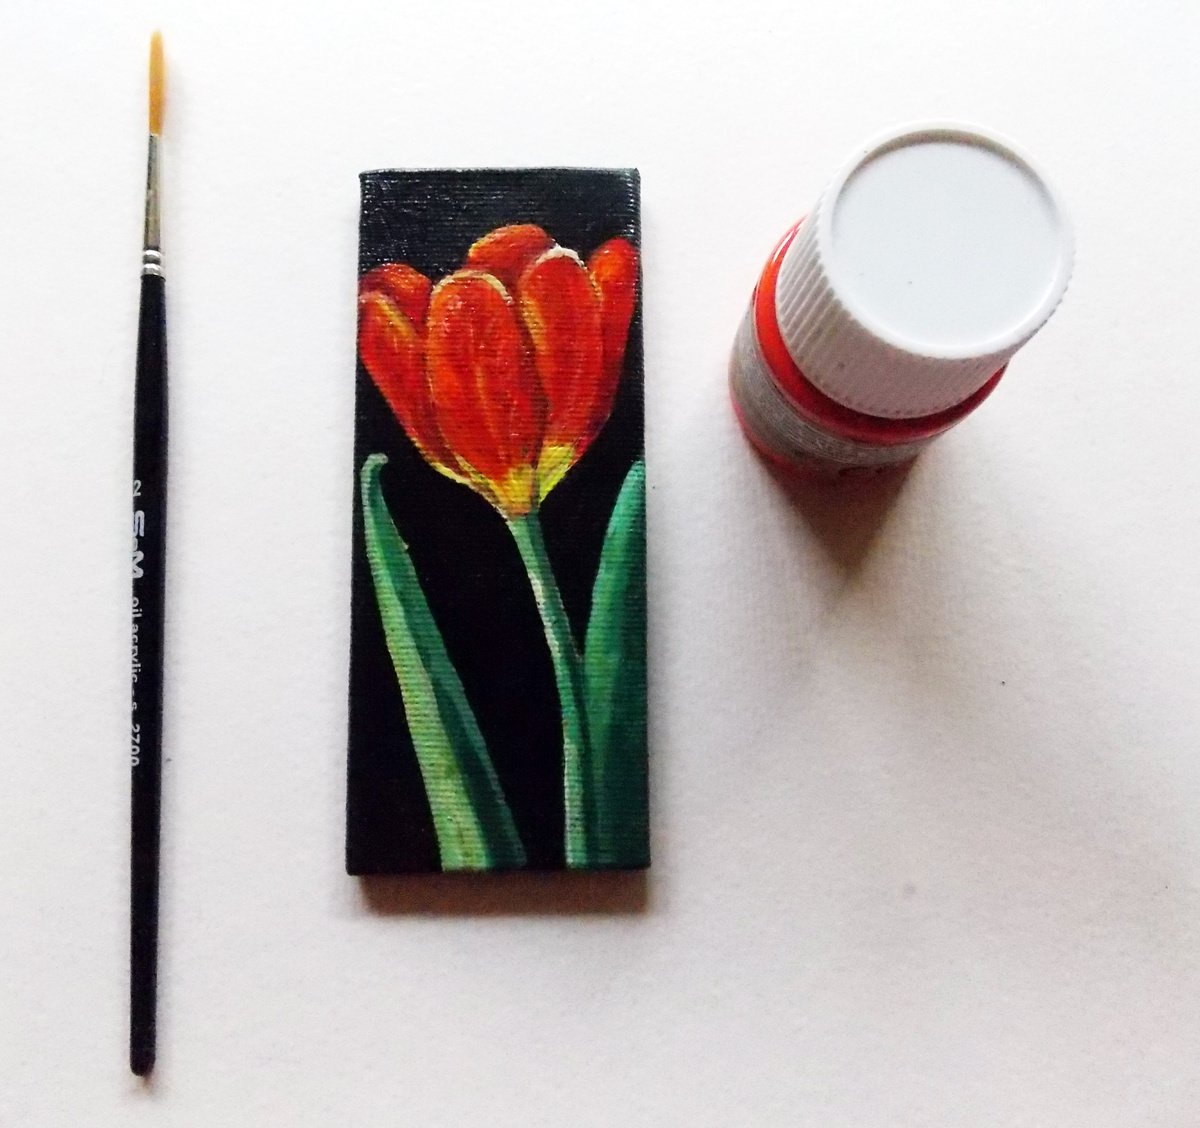 Red Tulip - Miniature Original Painting Fridge Magnet in Acrylic on Mini Canvas Hardboard by Adriana Vasile